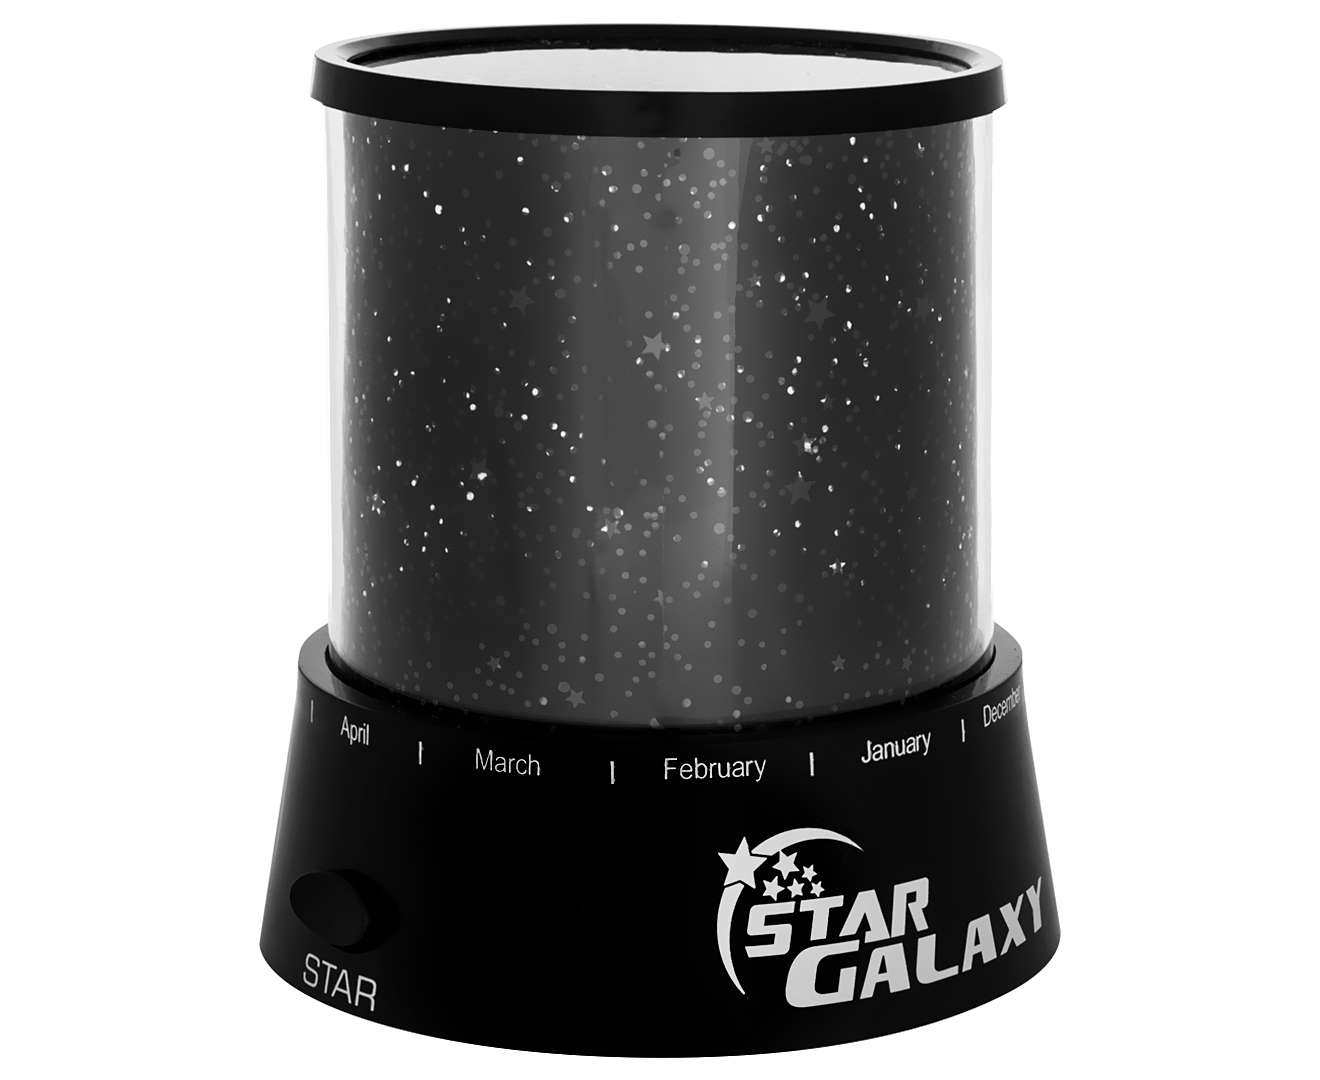 Star Galaxy LED Projector | Catch.co.nz